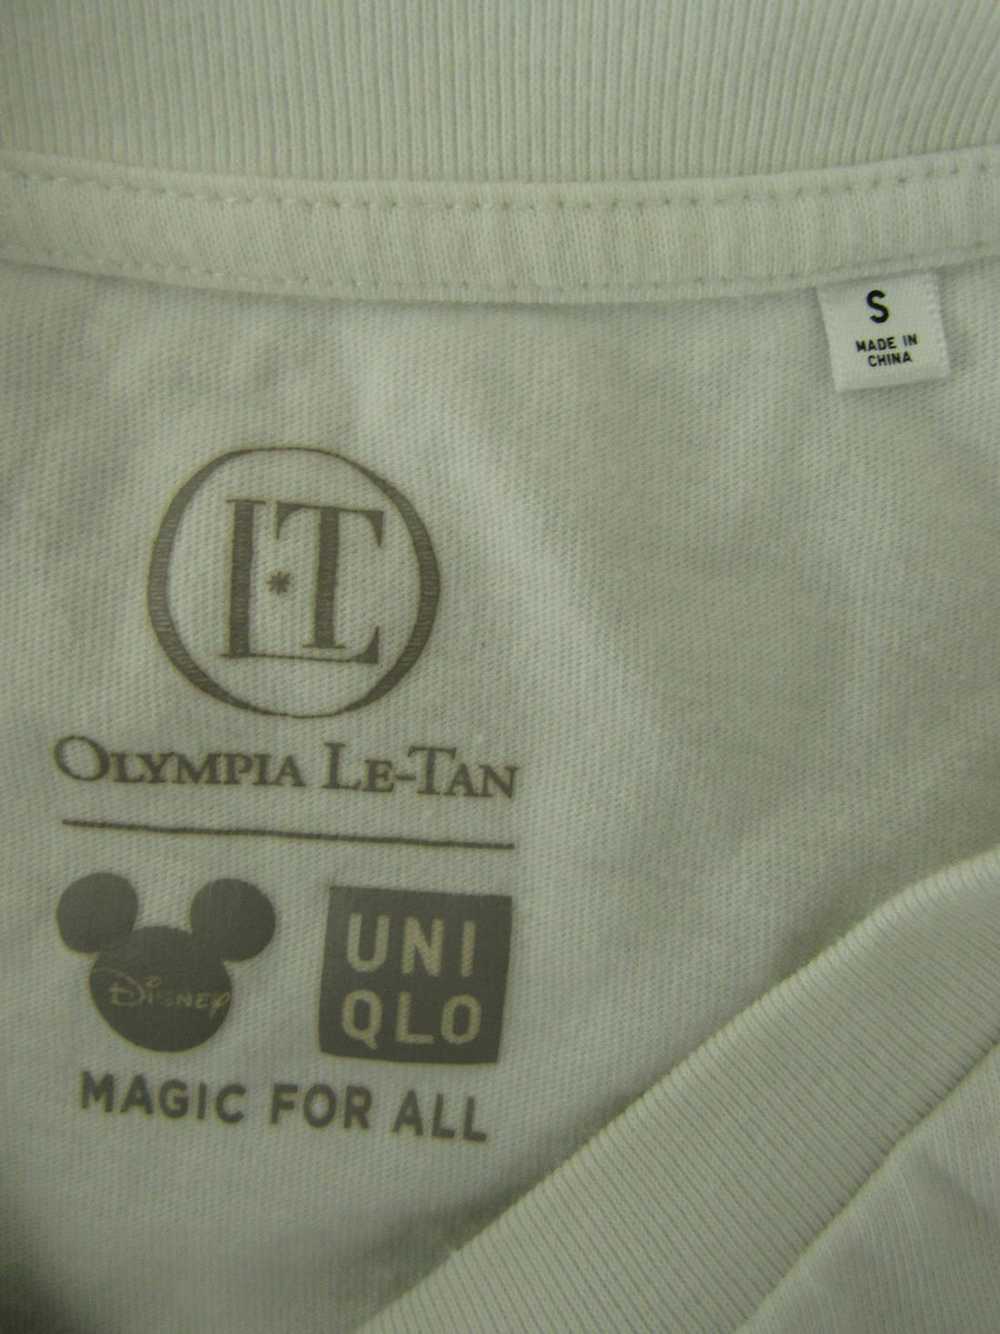 Disney Uni Qlo T-Shirt Top - image 3